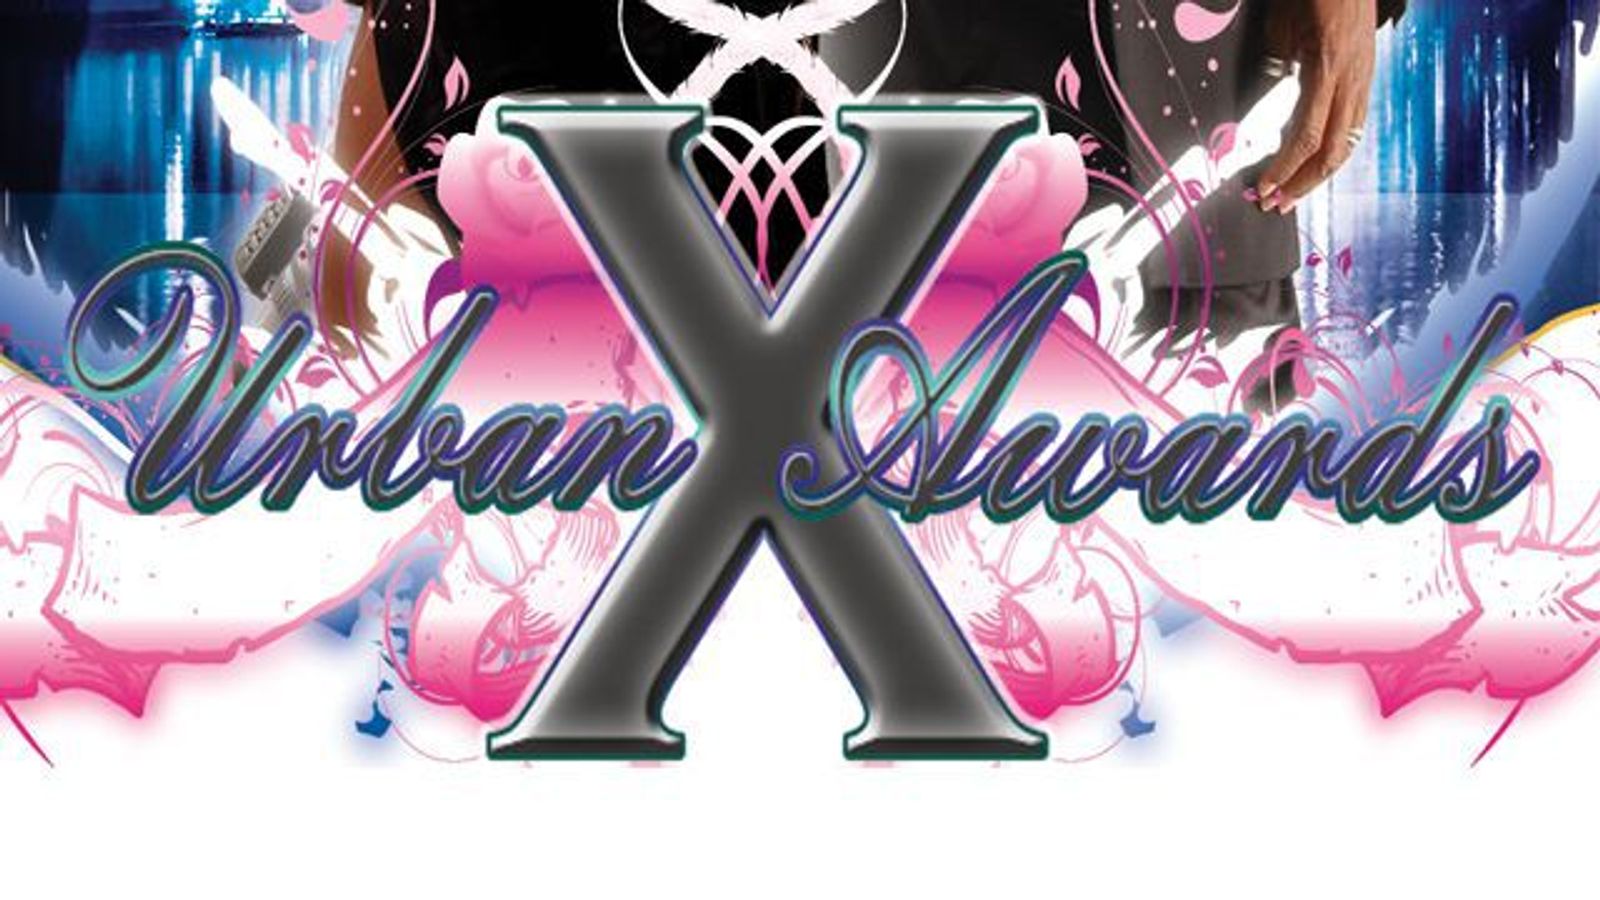 Urban X Awards Announces 2012 Winners